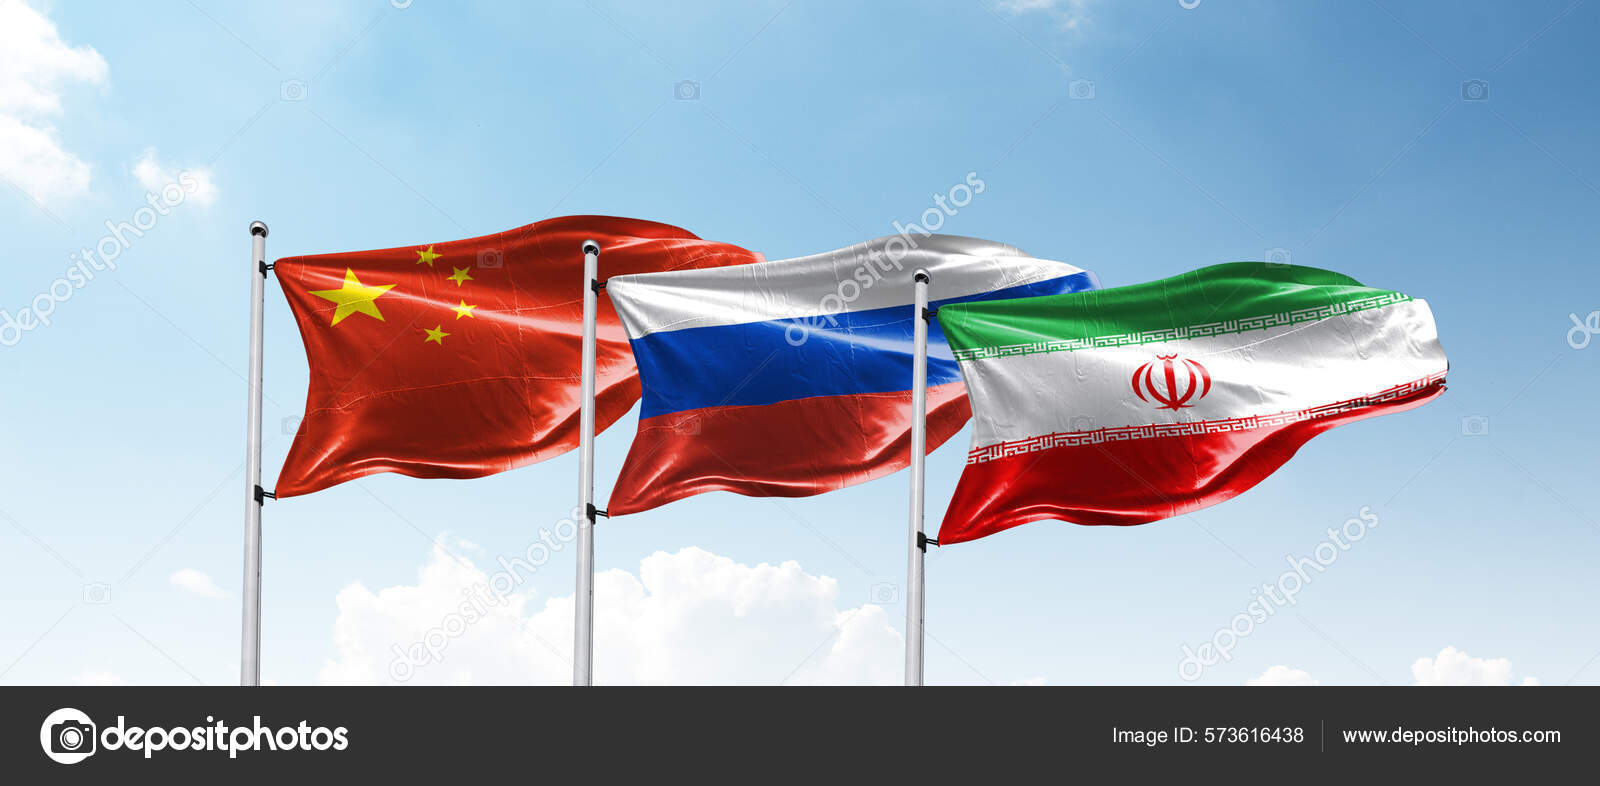 depositphotos_573616438-stock-photo-flags-china-russia-iran-countries.jpg